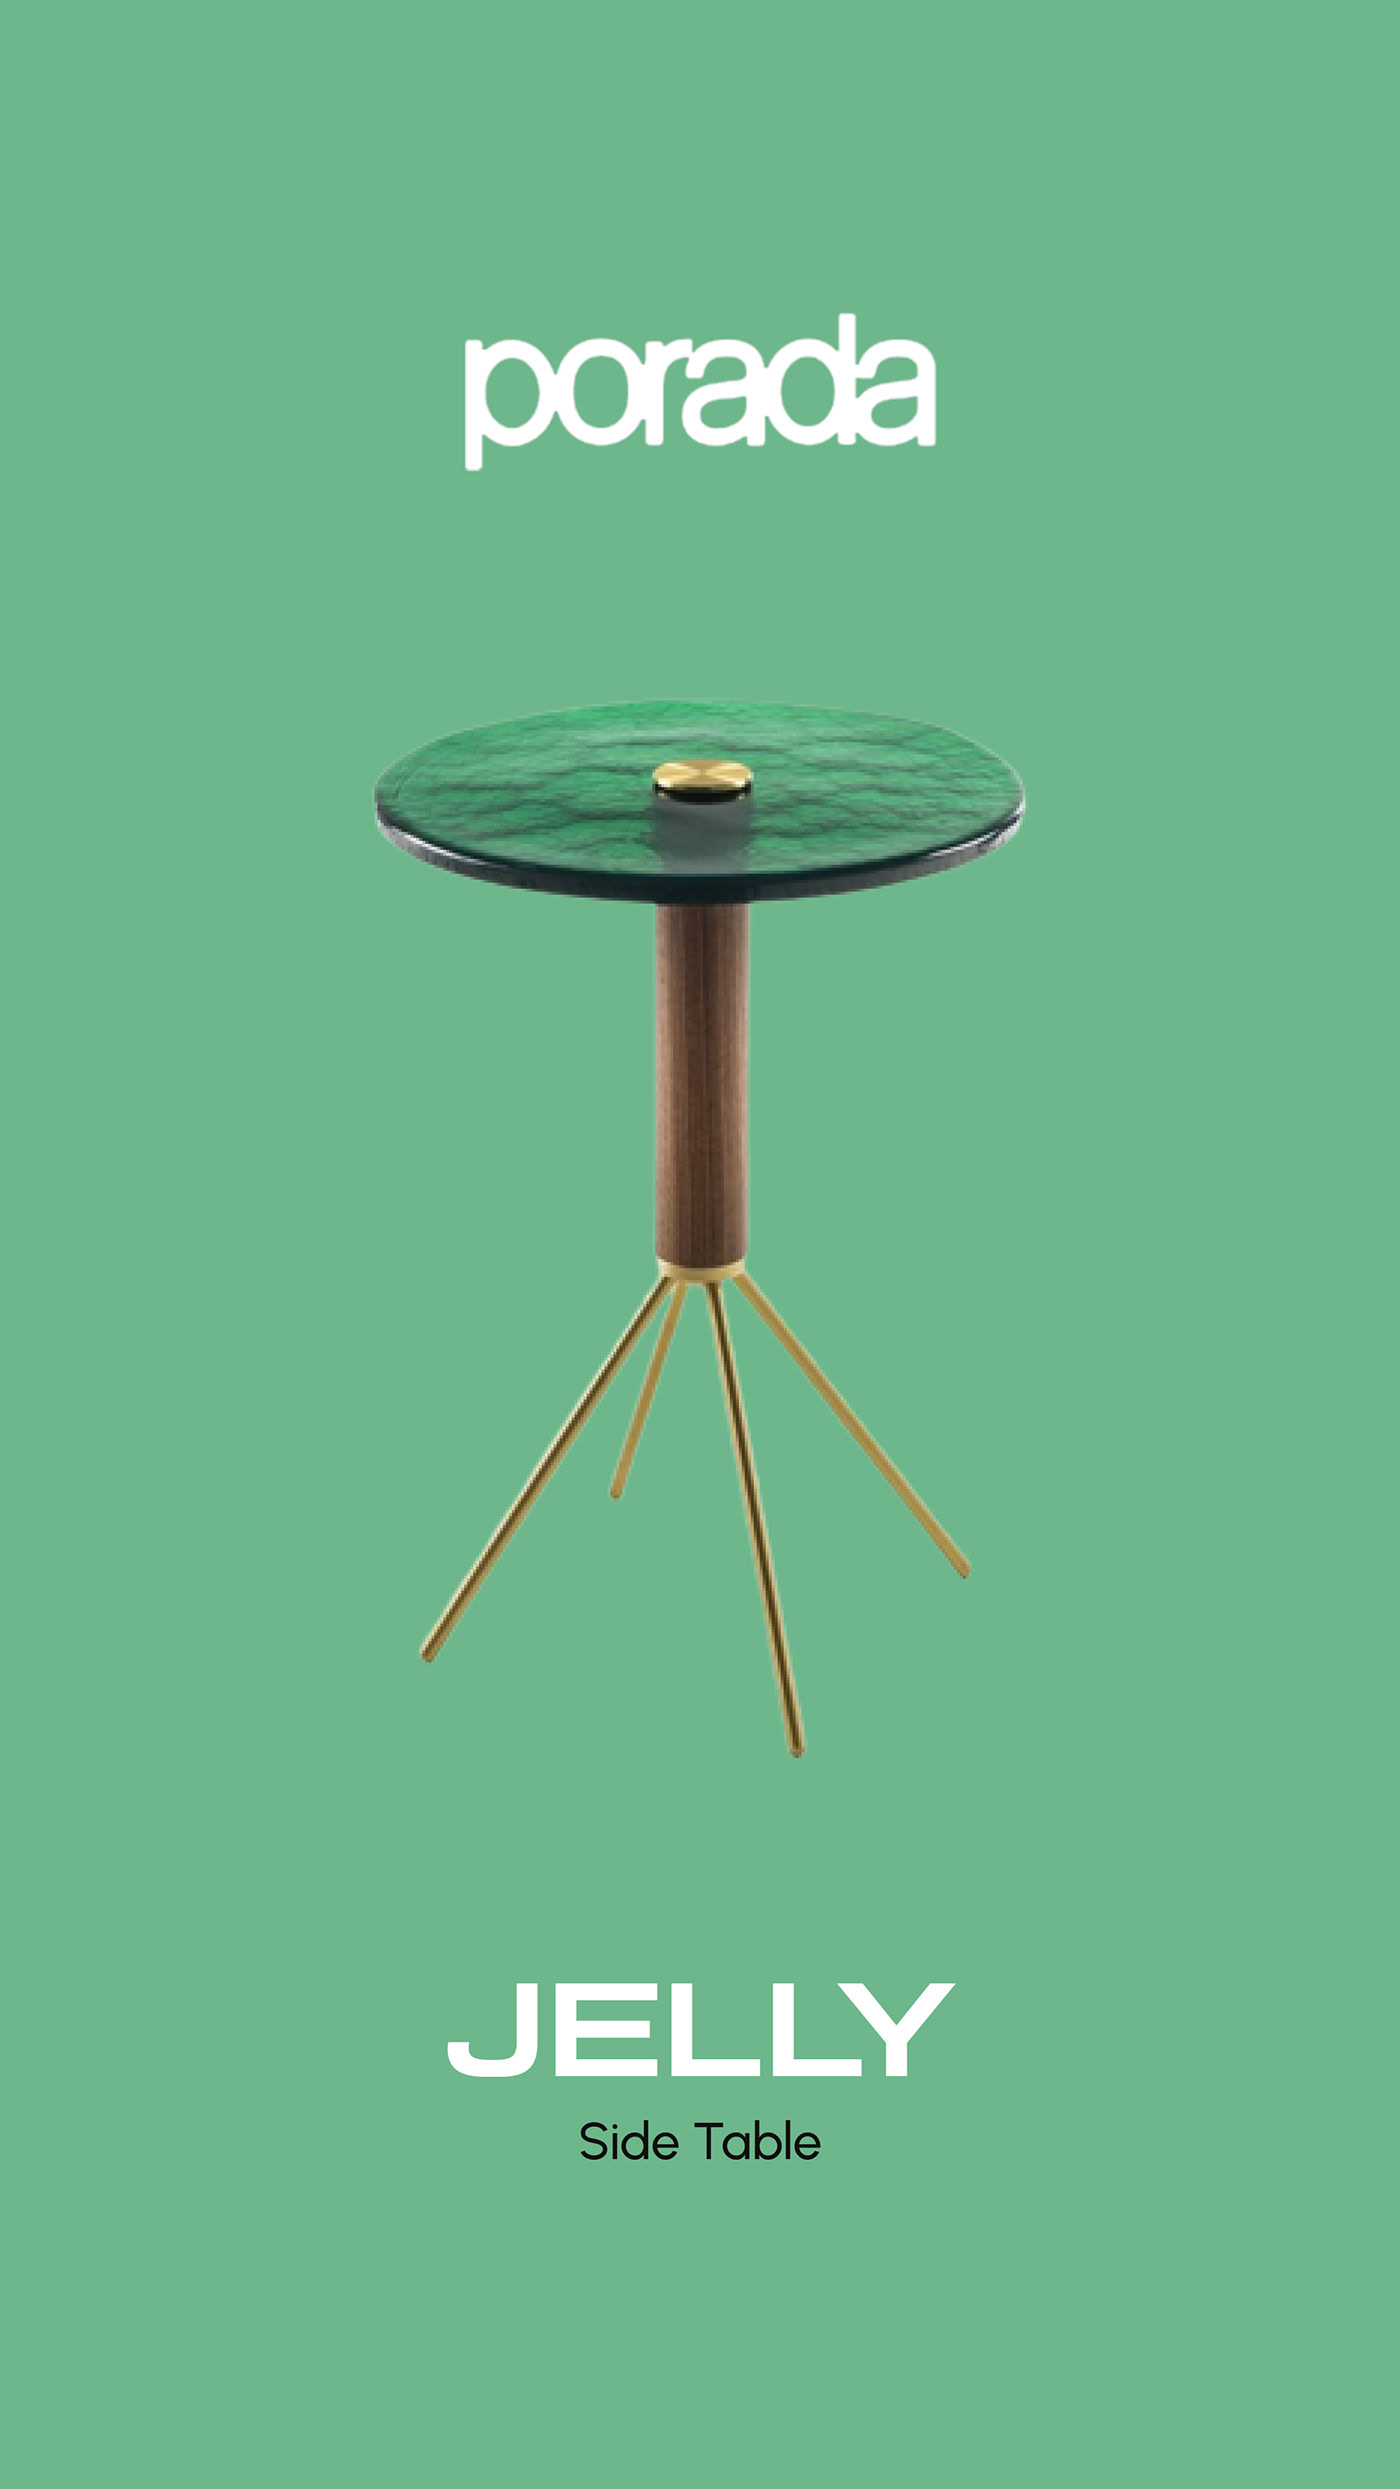 furniture table sidetable luxury Social media post instagram Porada Adobe After Effects Illustrator Graphic Designer